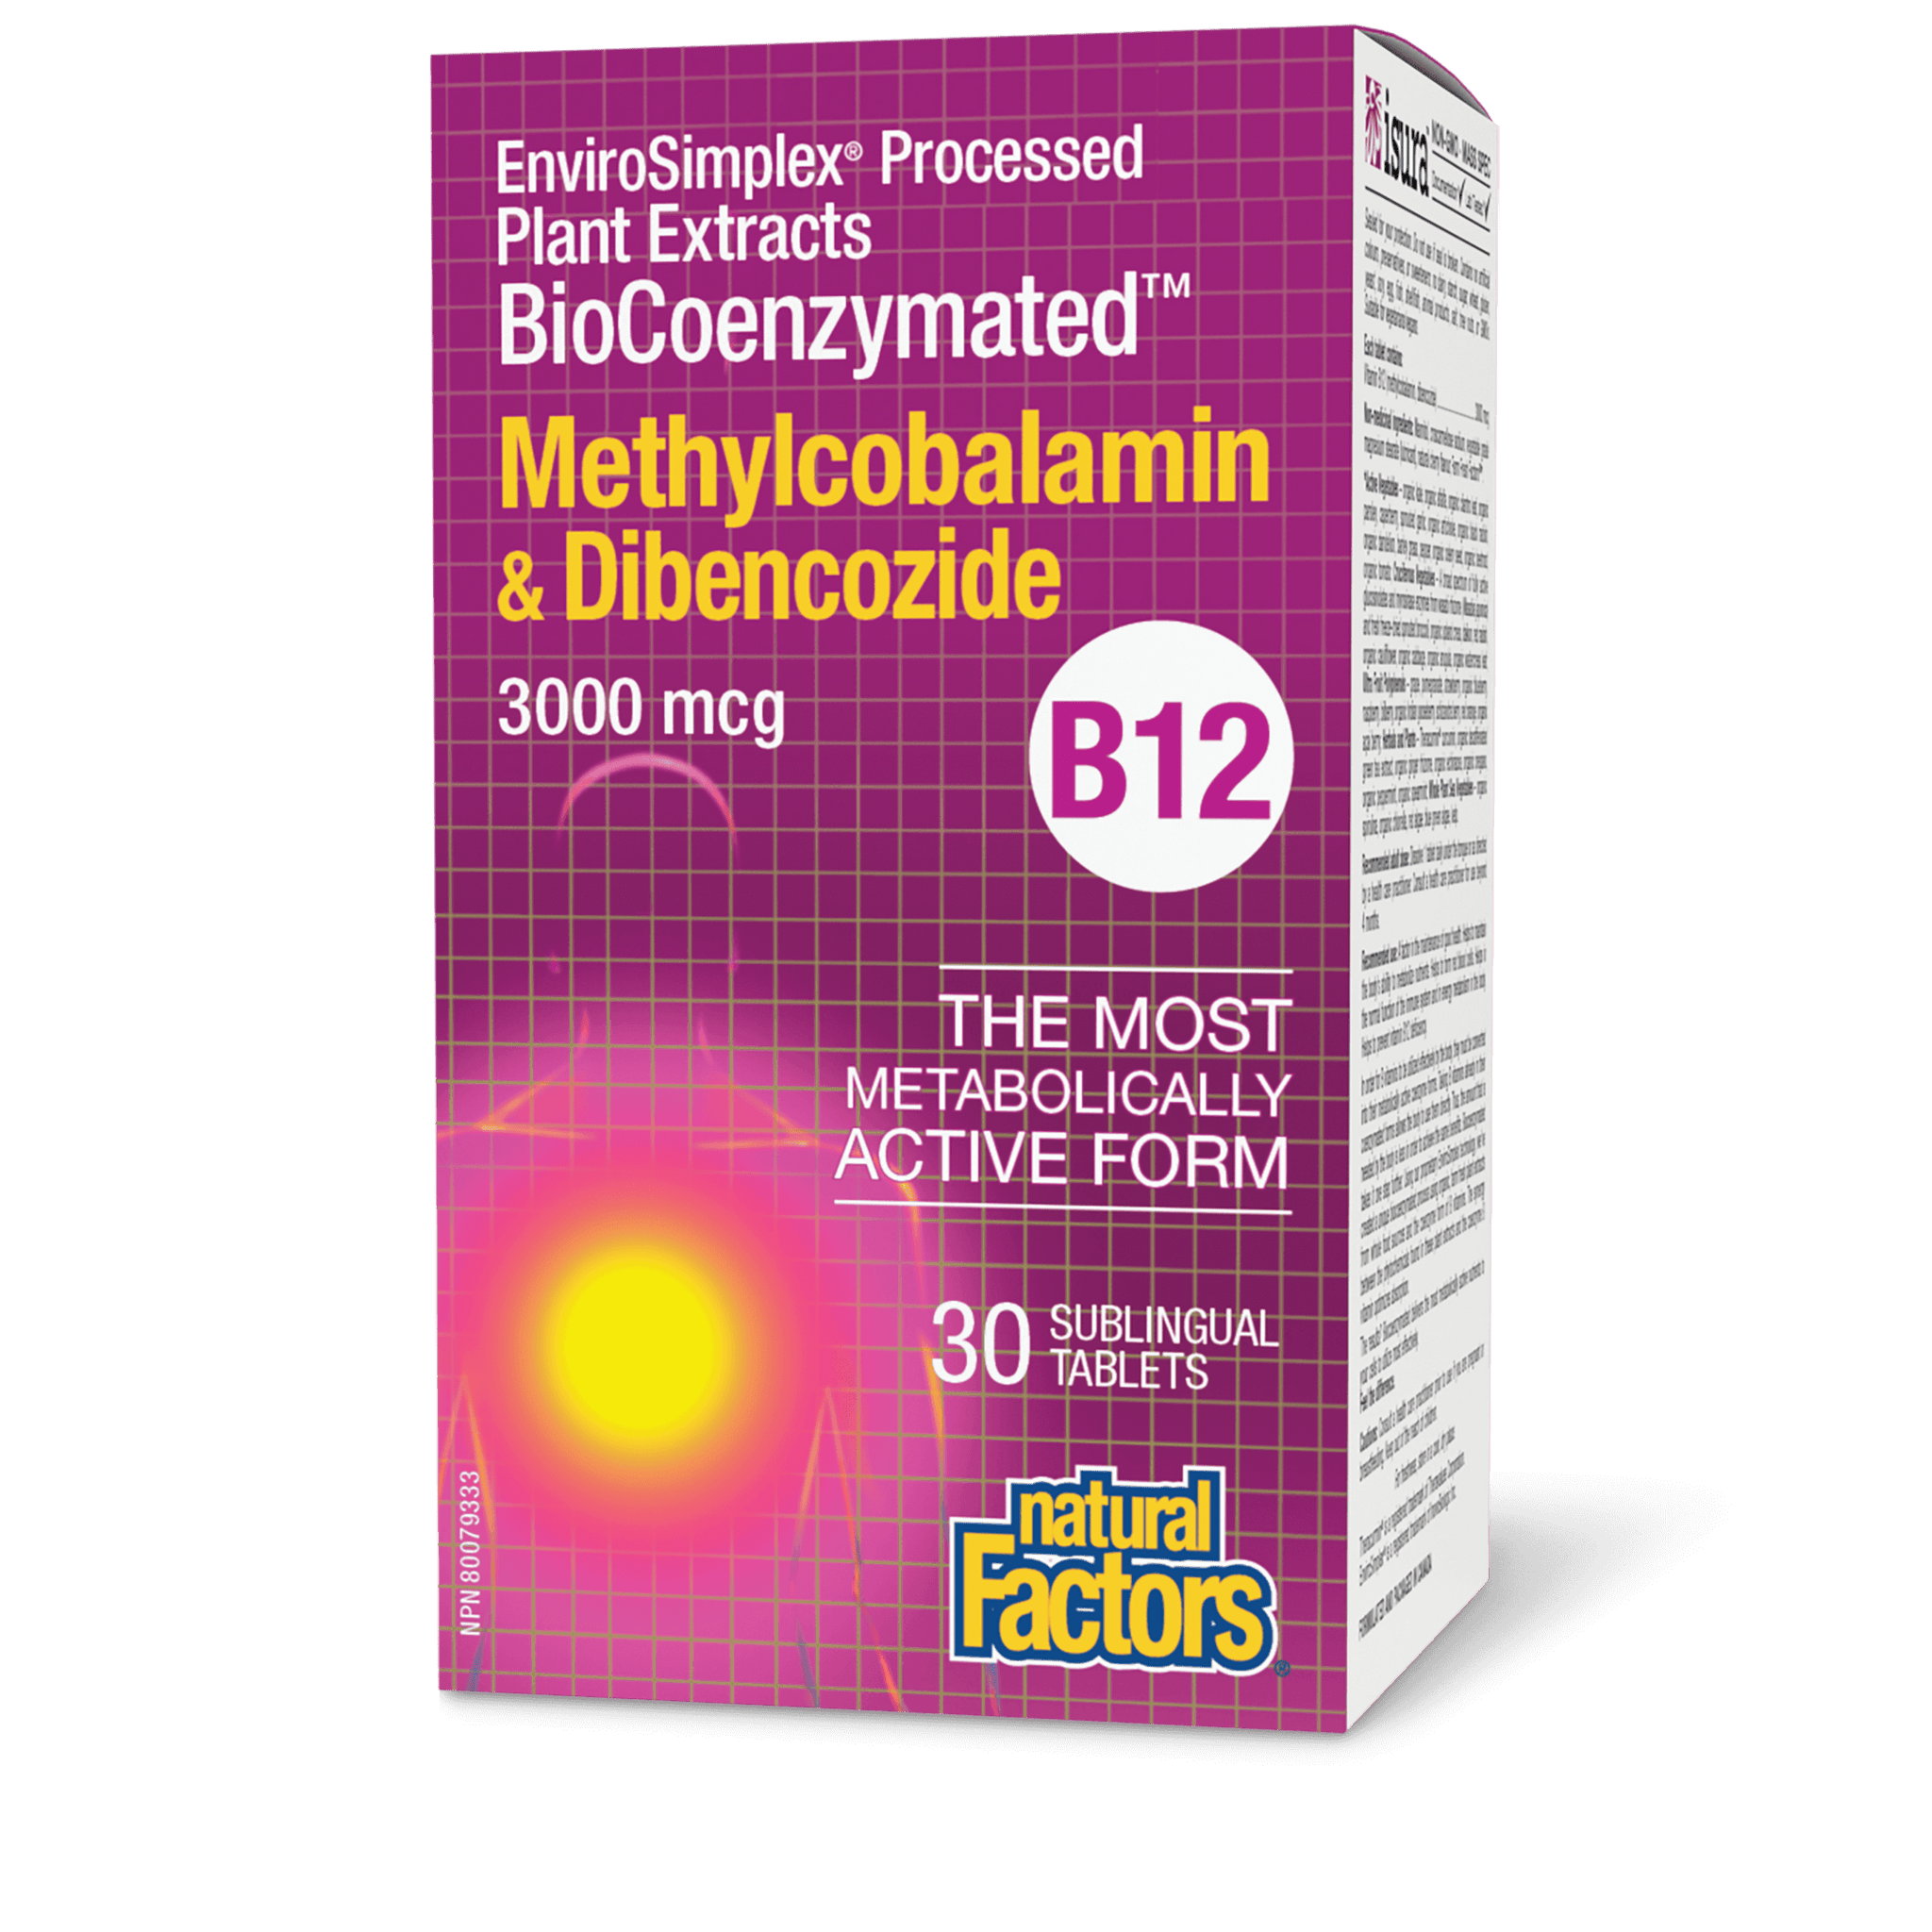 Natural Factors Biocoenzymated Methylcobalamin-Dibencozide B12 30t